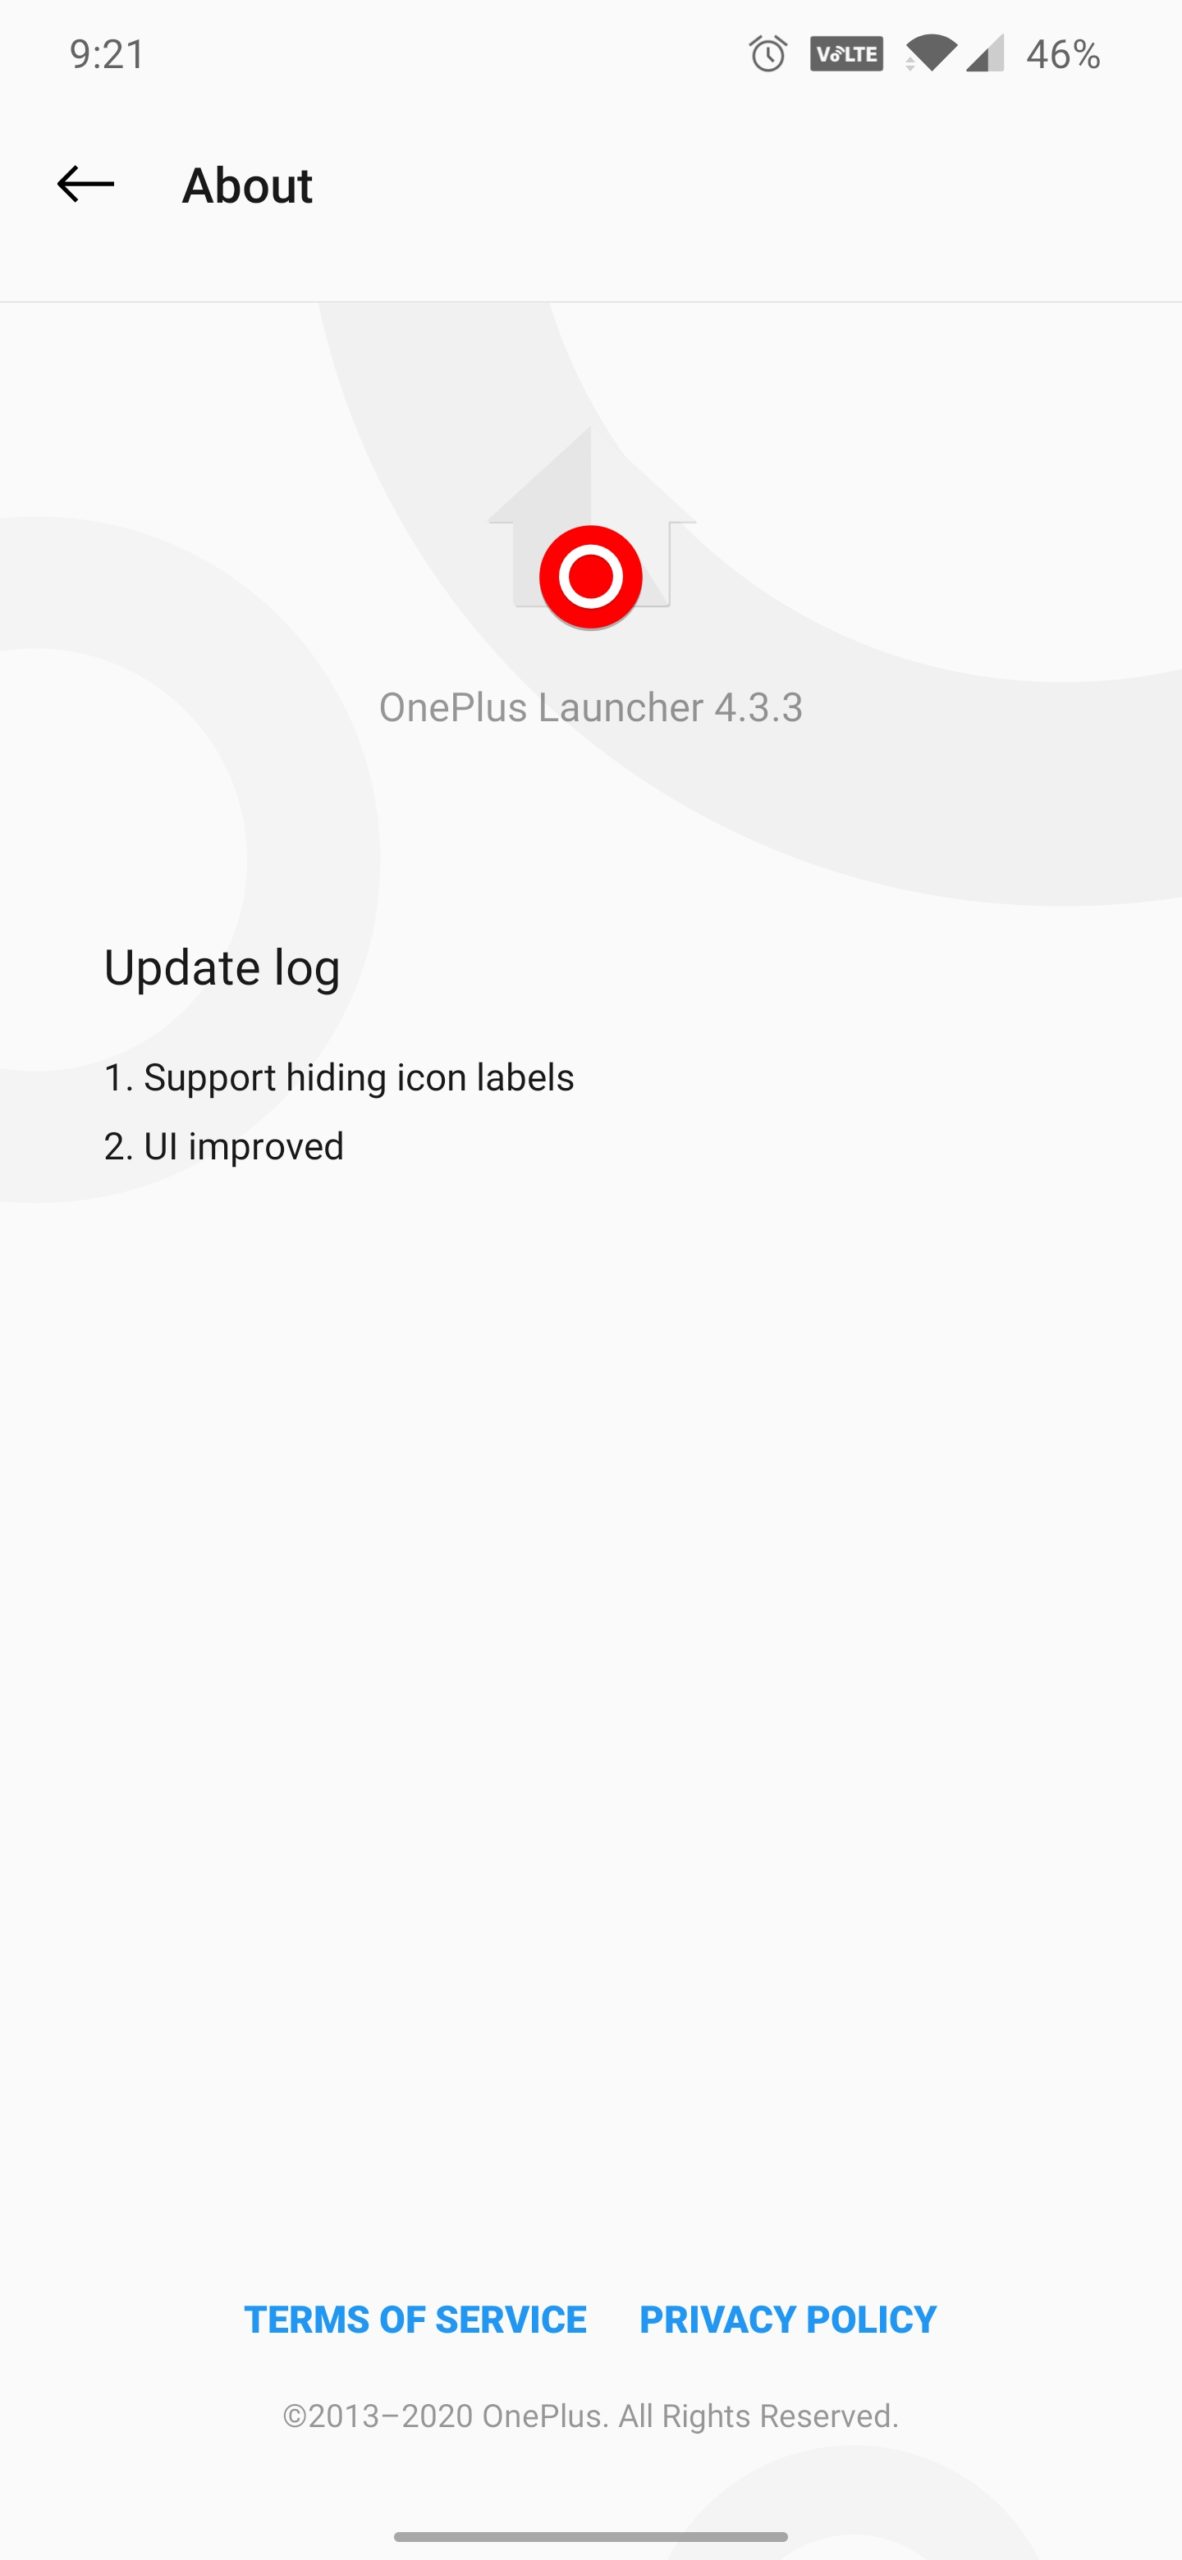 OnePlus Launcher 4.3.3 